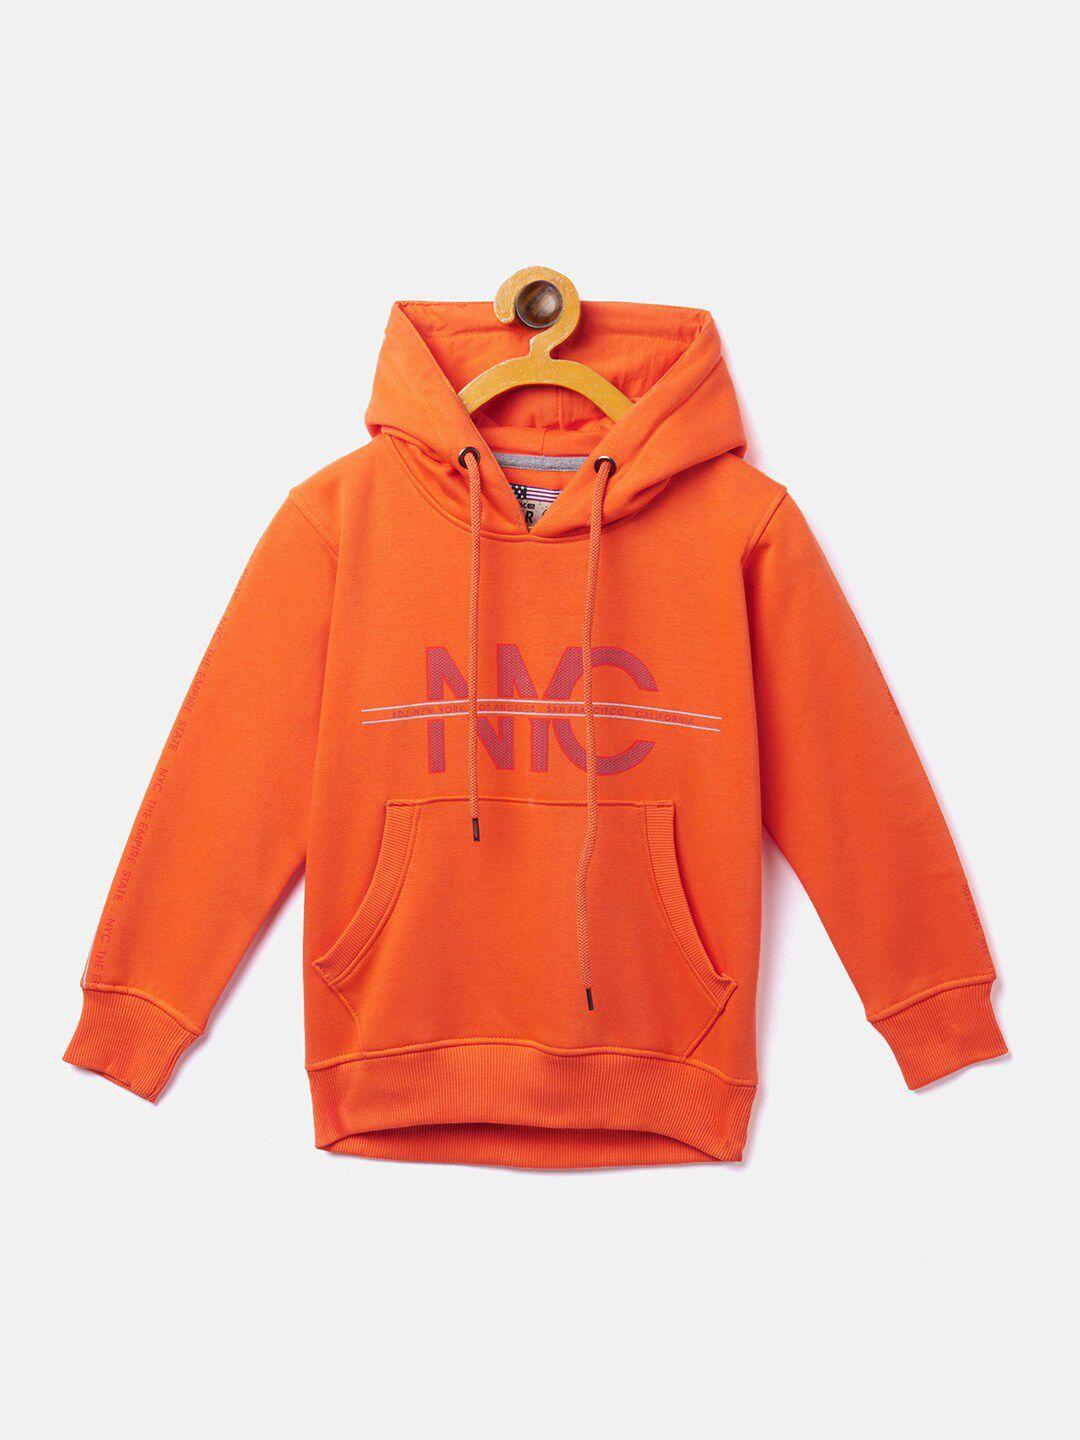 duke boys orange printed sweatshirt